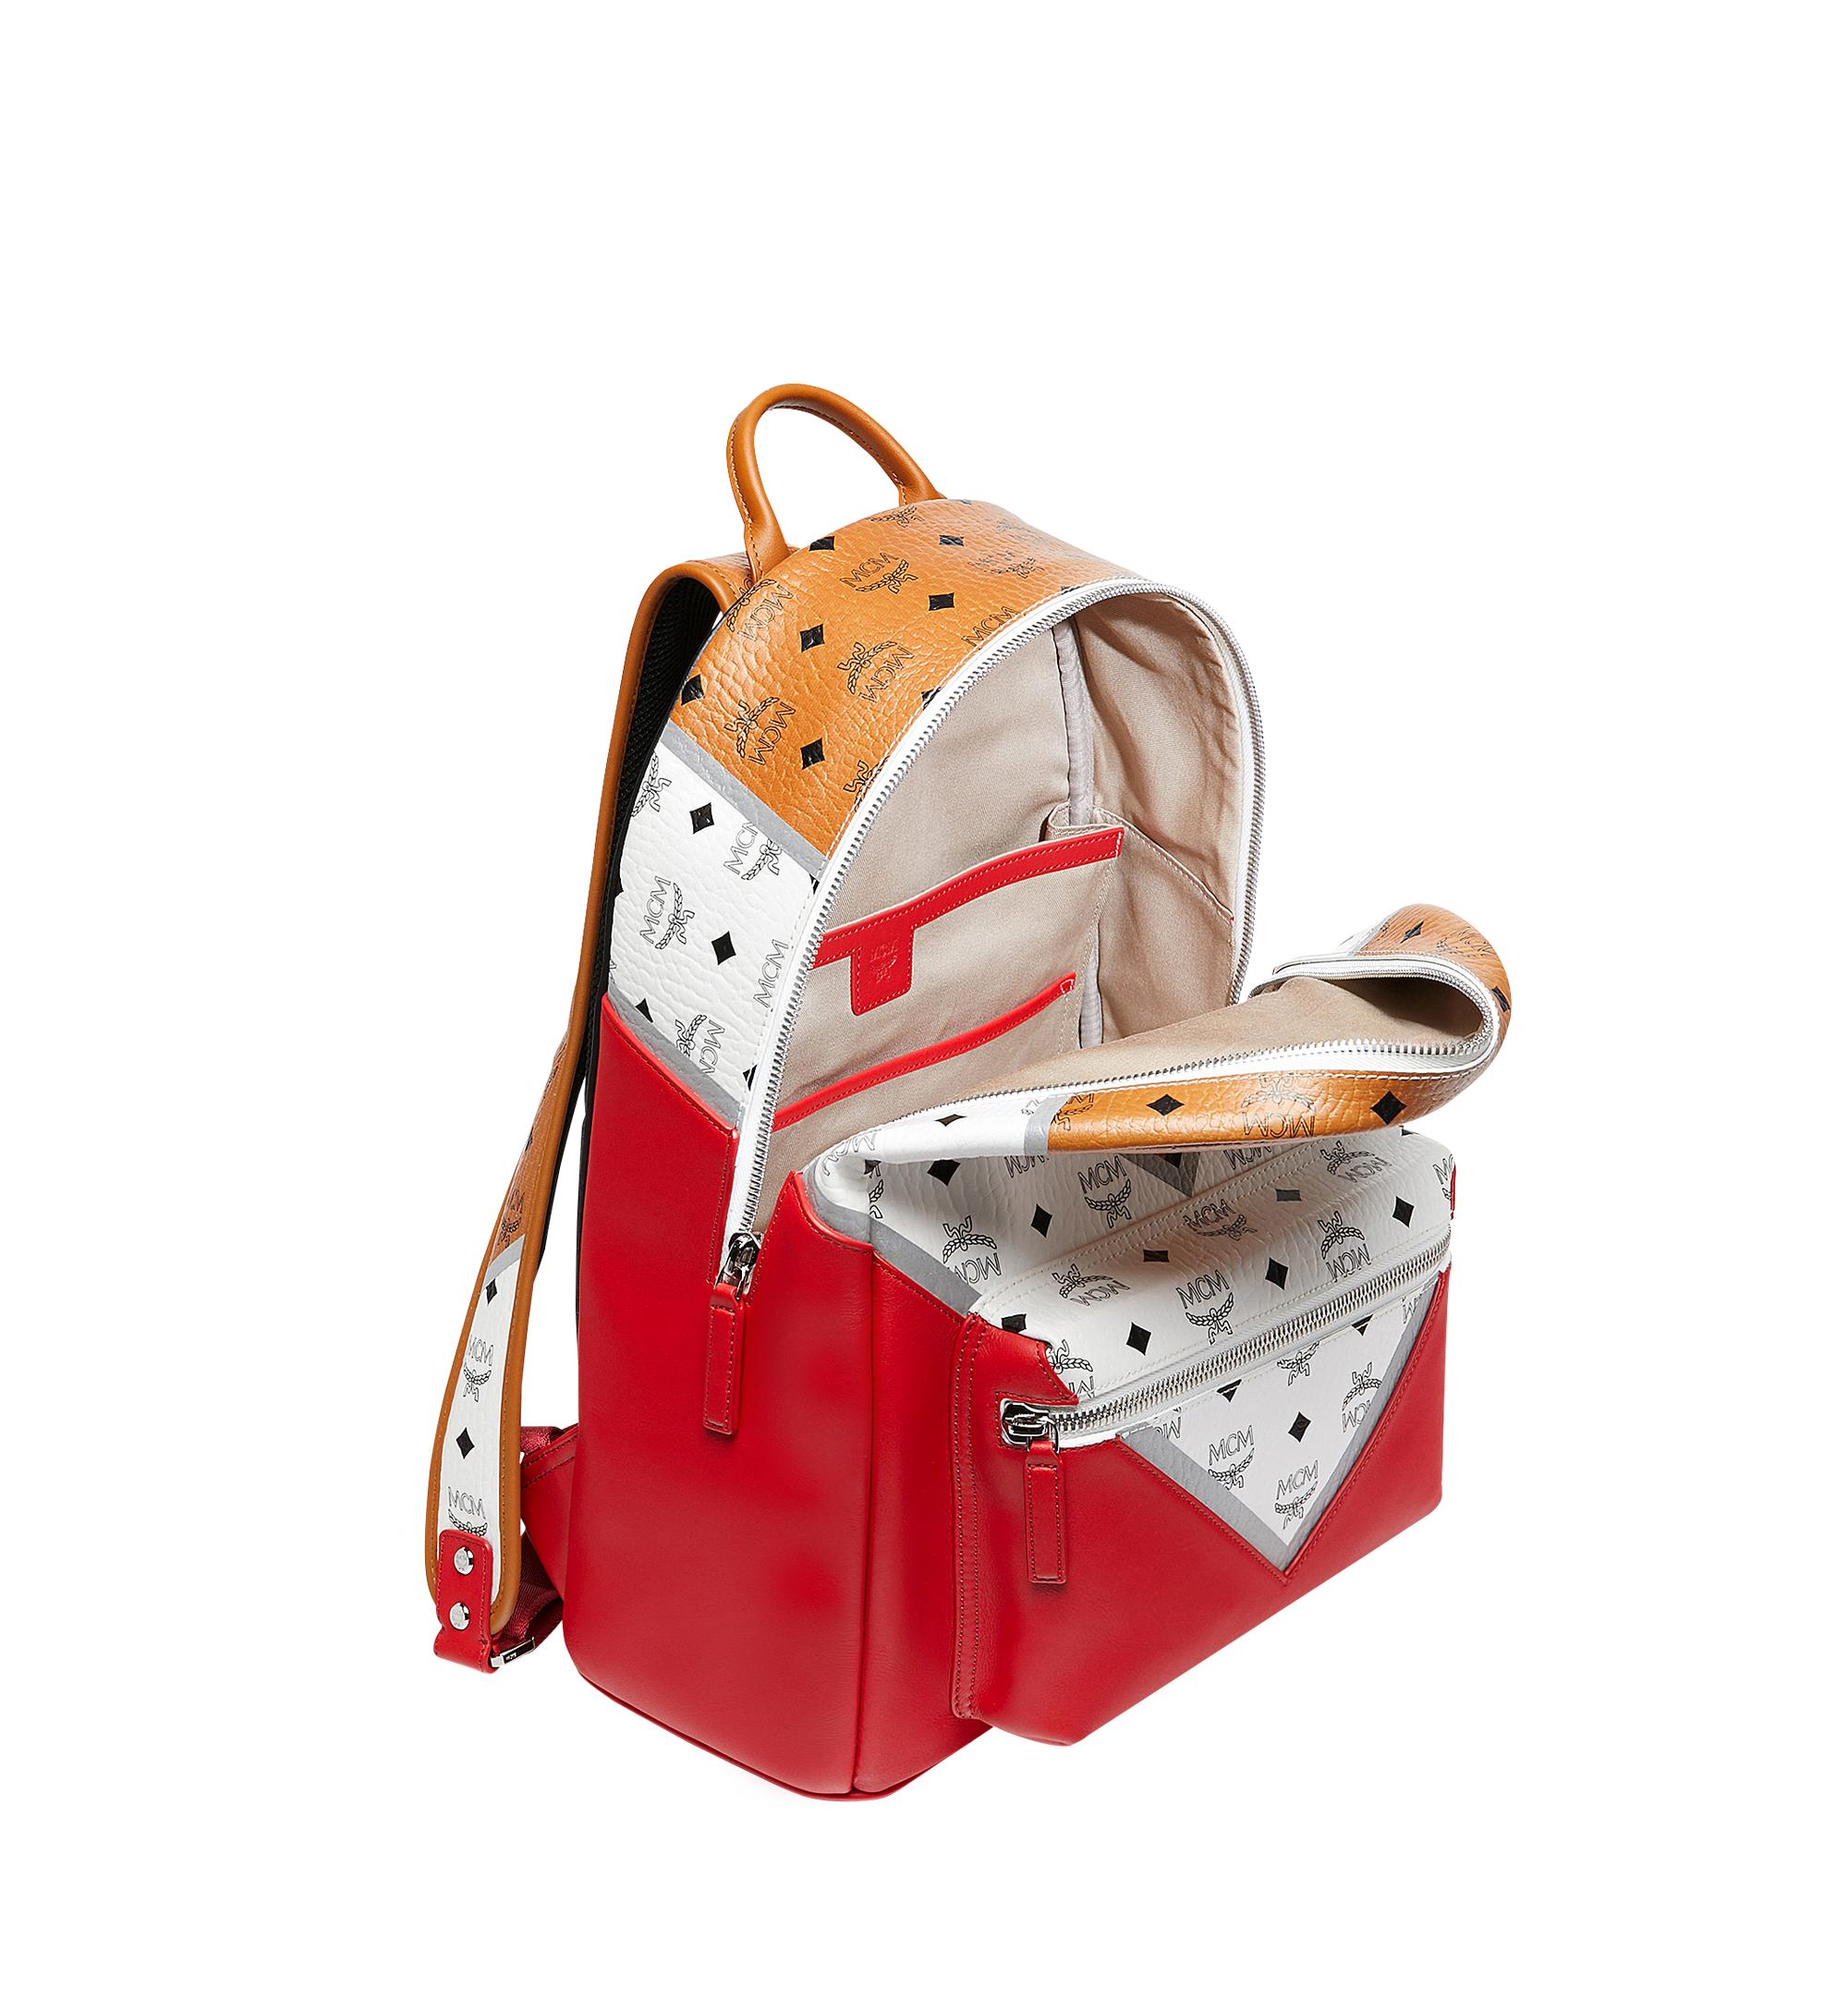 Mcm Outlet: backpack for man - Copper Red